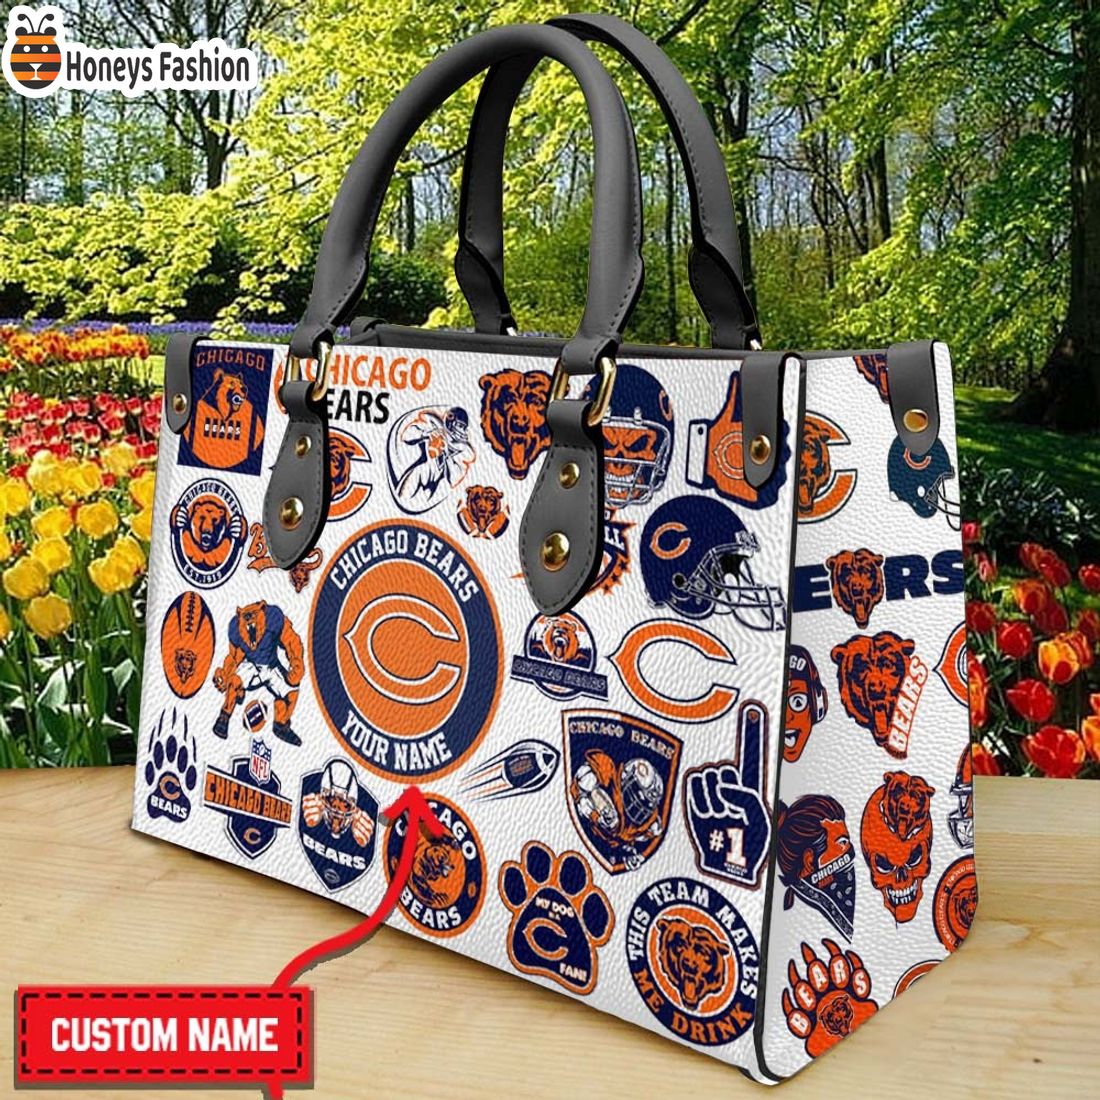 Chicago Bears Personalized Leather Handbag